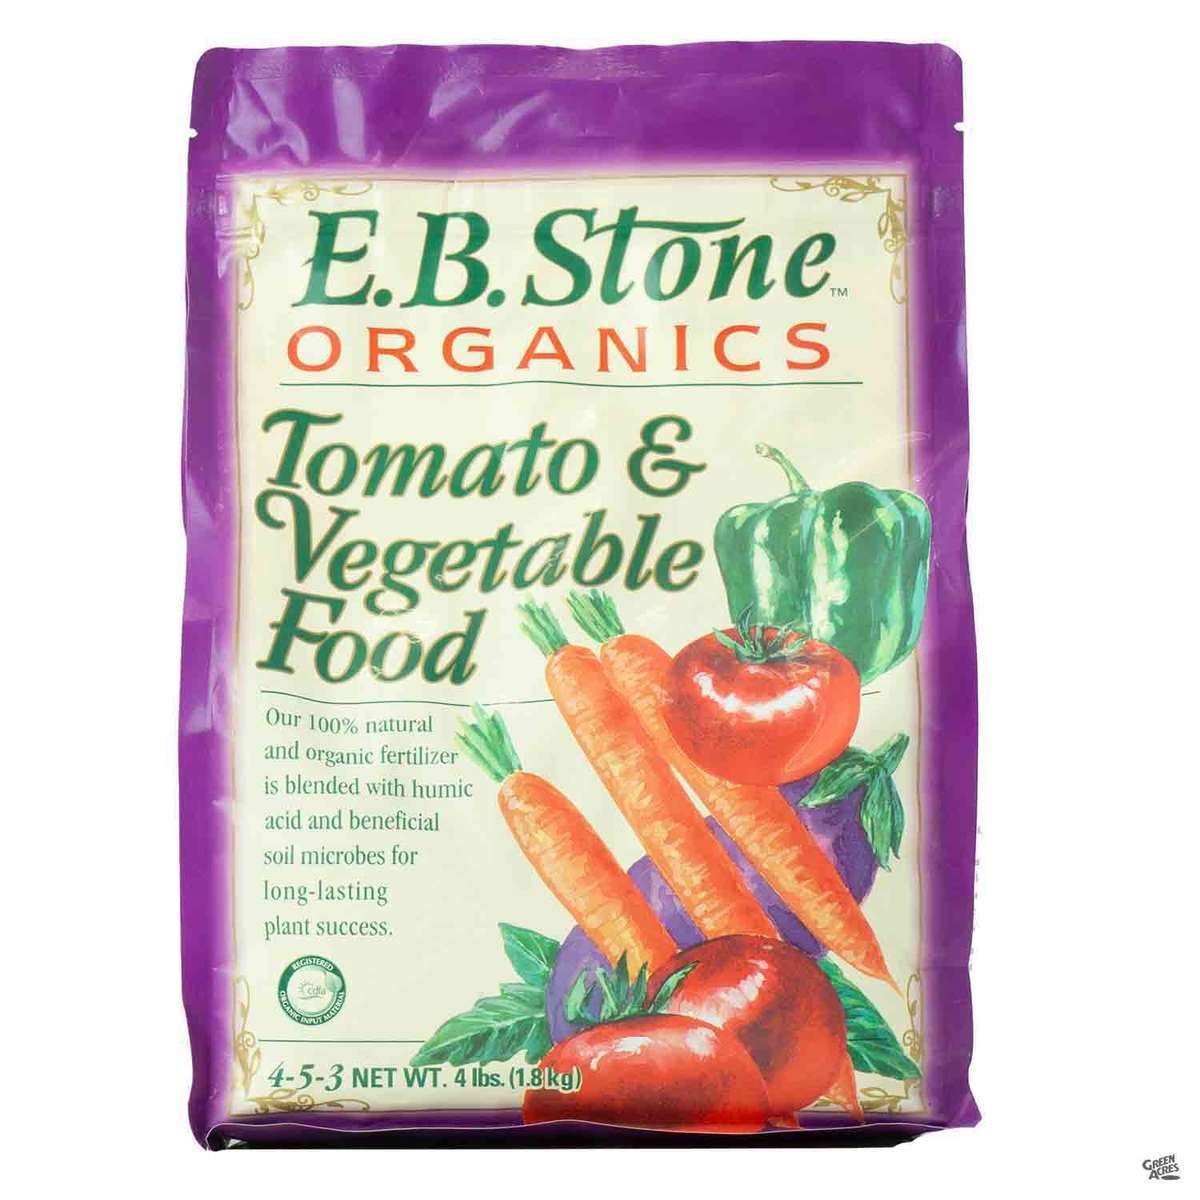 E.B. Stone Organics Tomato and Vegetable Food 